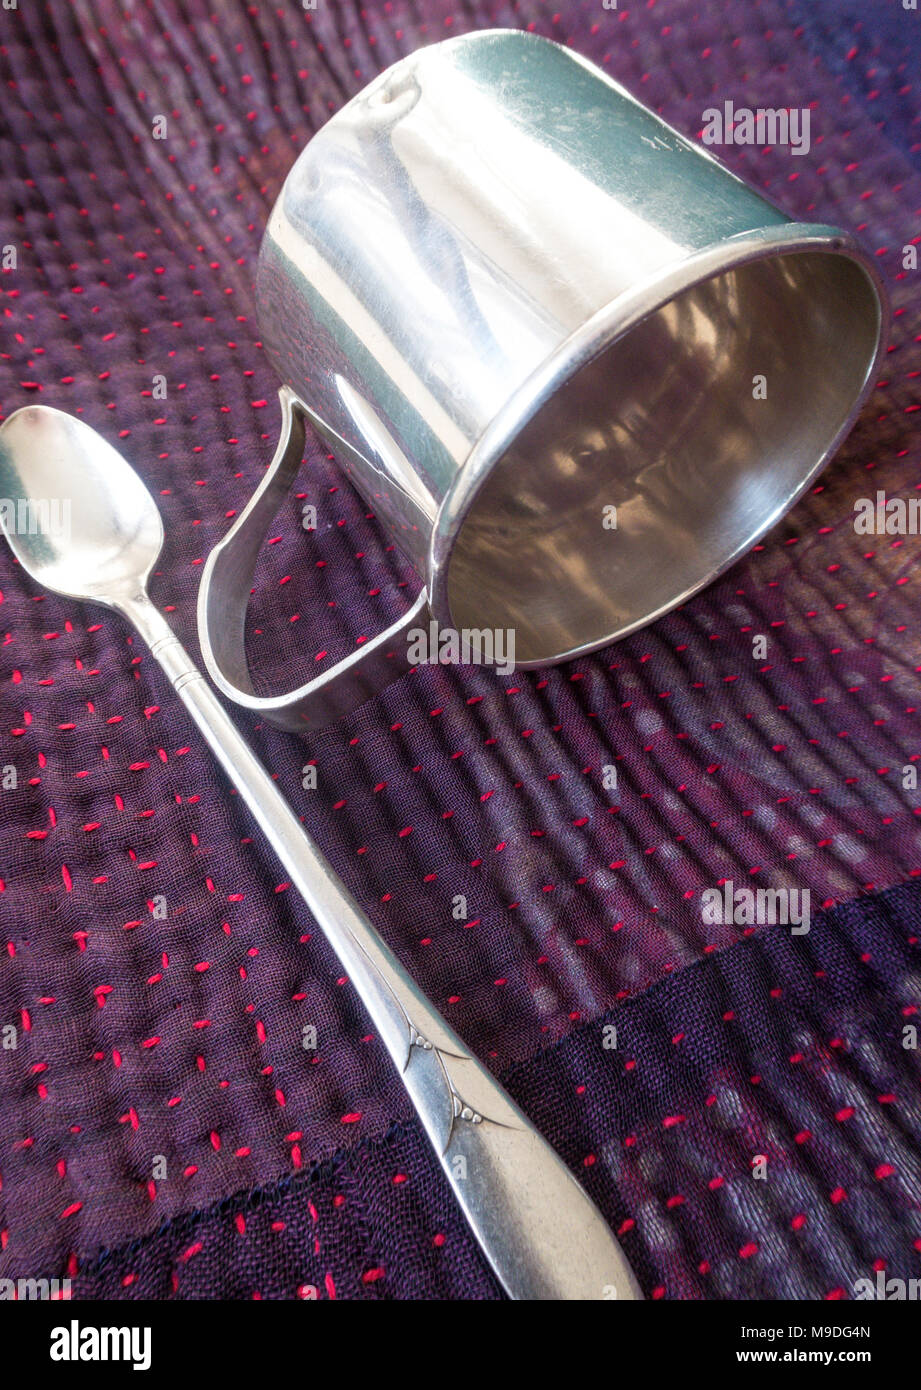 https://c8.alamy.com/comp/M9DG4N/vintage-sterling-silver-baby-spoon-and-cup-usa-M9DG4N.jpg